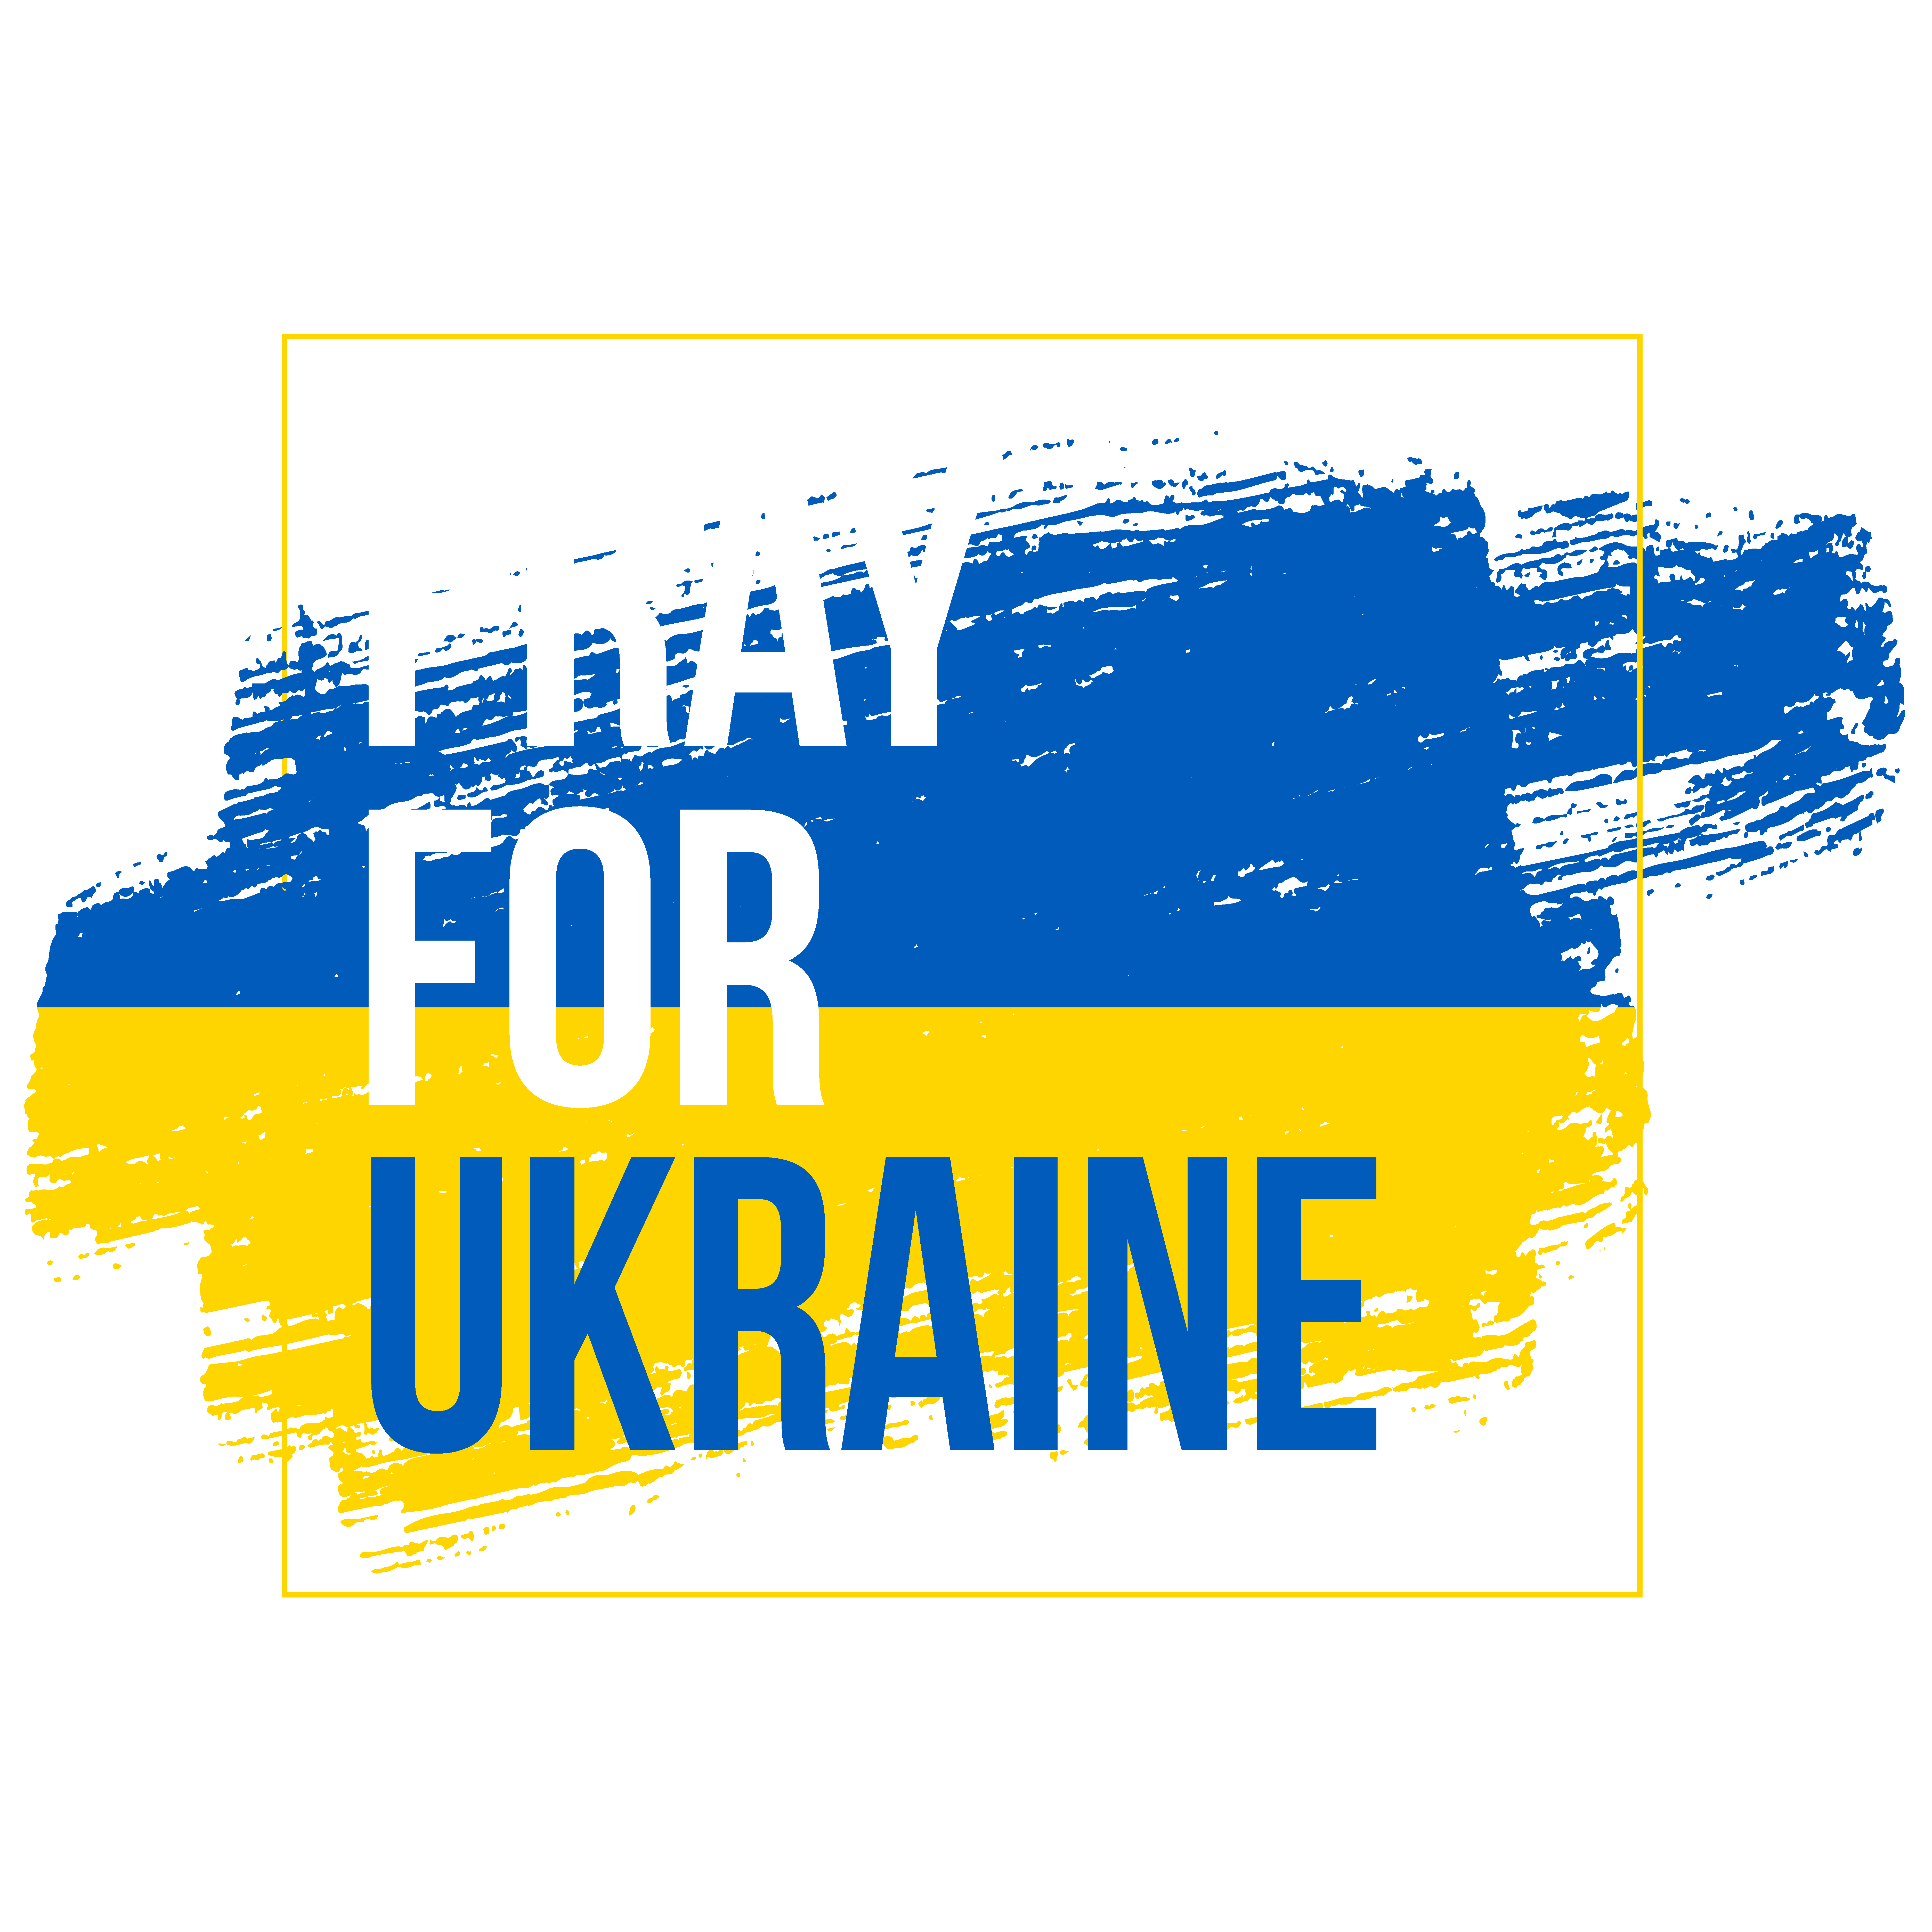 pray-for-ukraine-xo-web.png